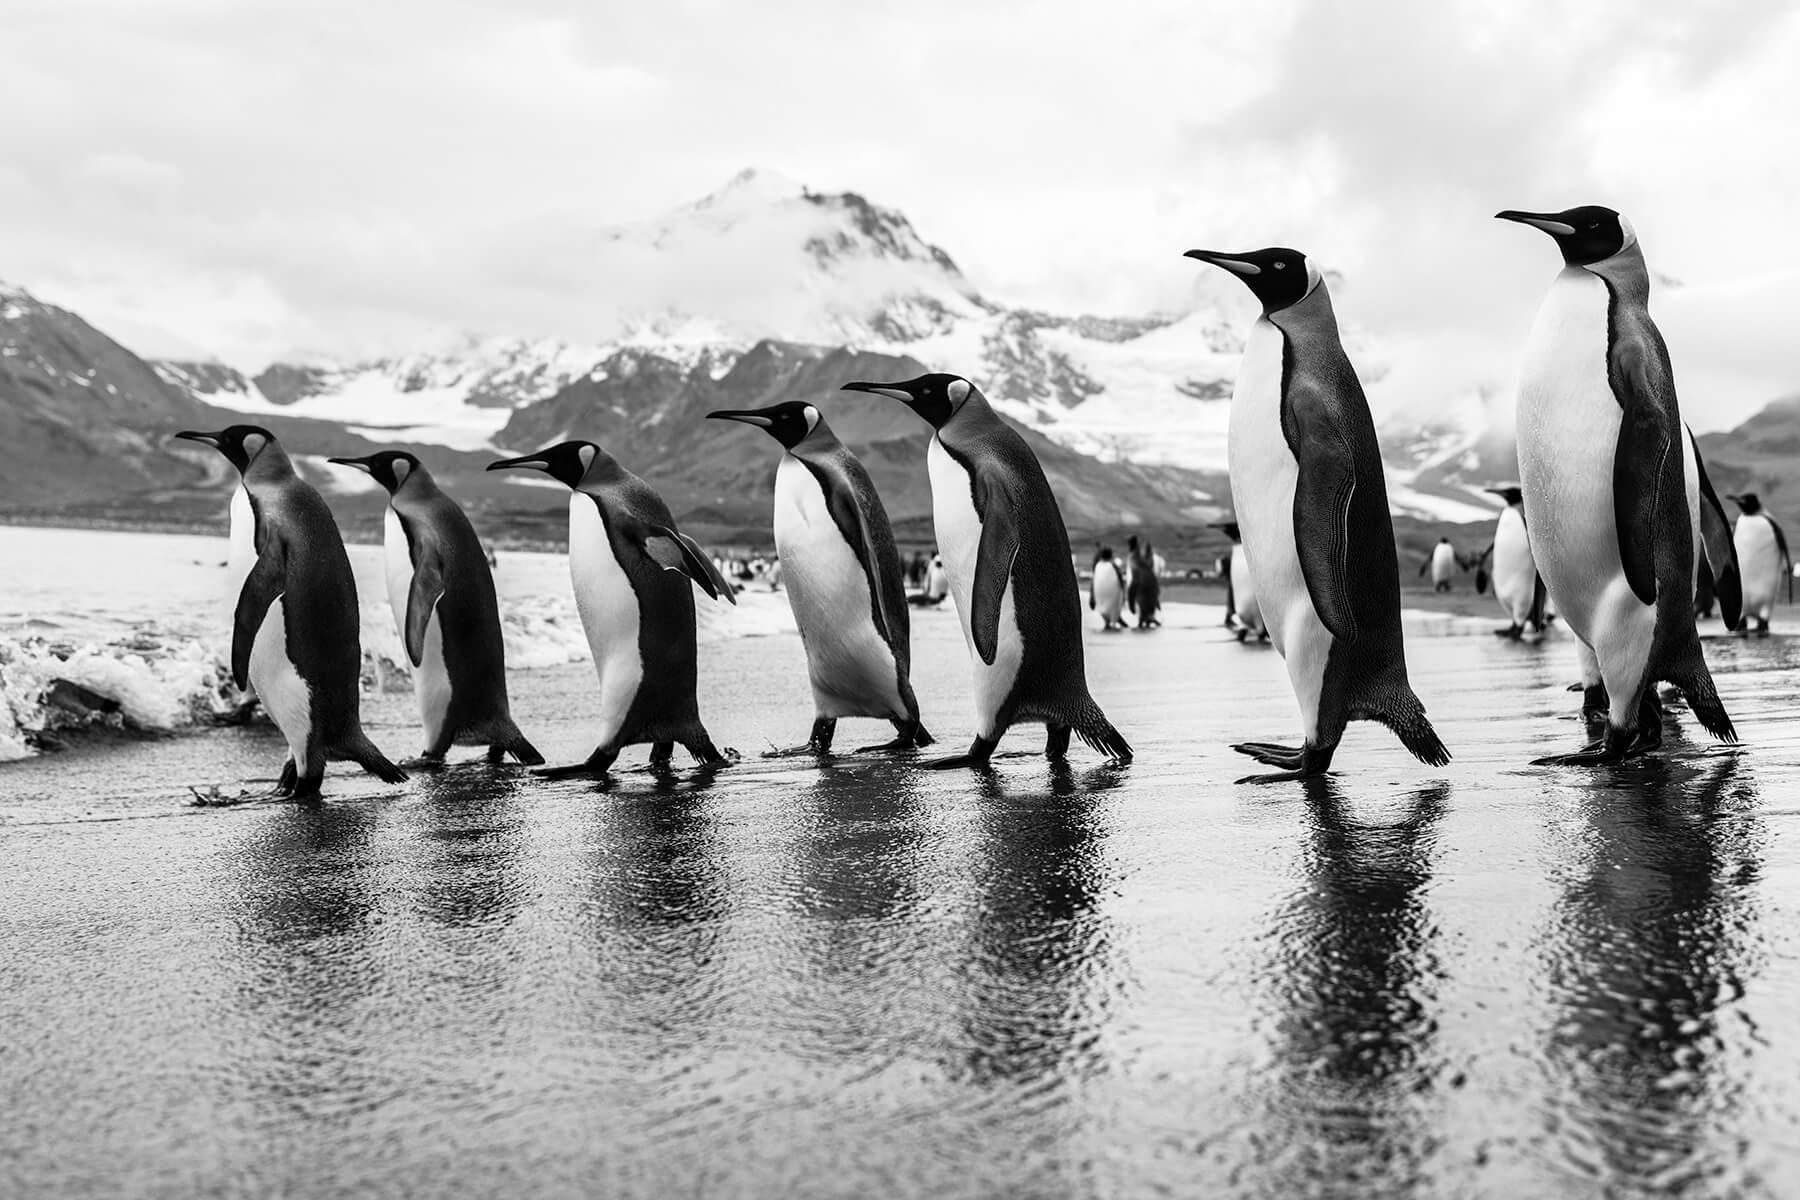 King penguins on the move Photographer: Artem Shestakov. Location: Antarctica.